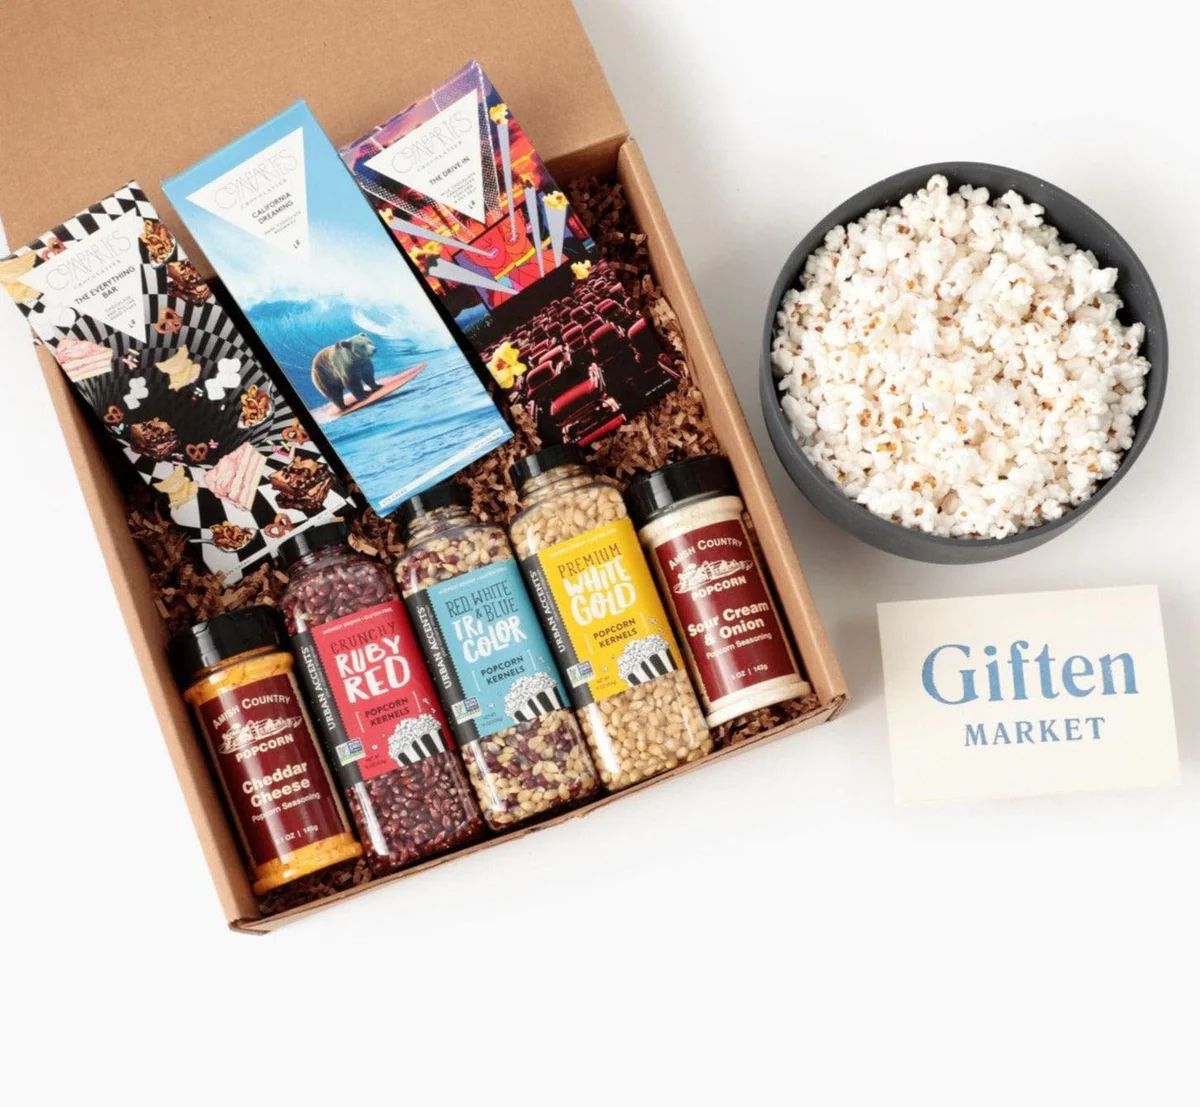 Movie Night Gift Box - Deluxe | Giften Market